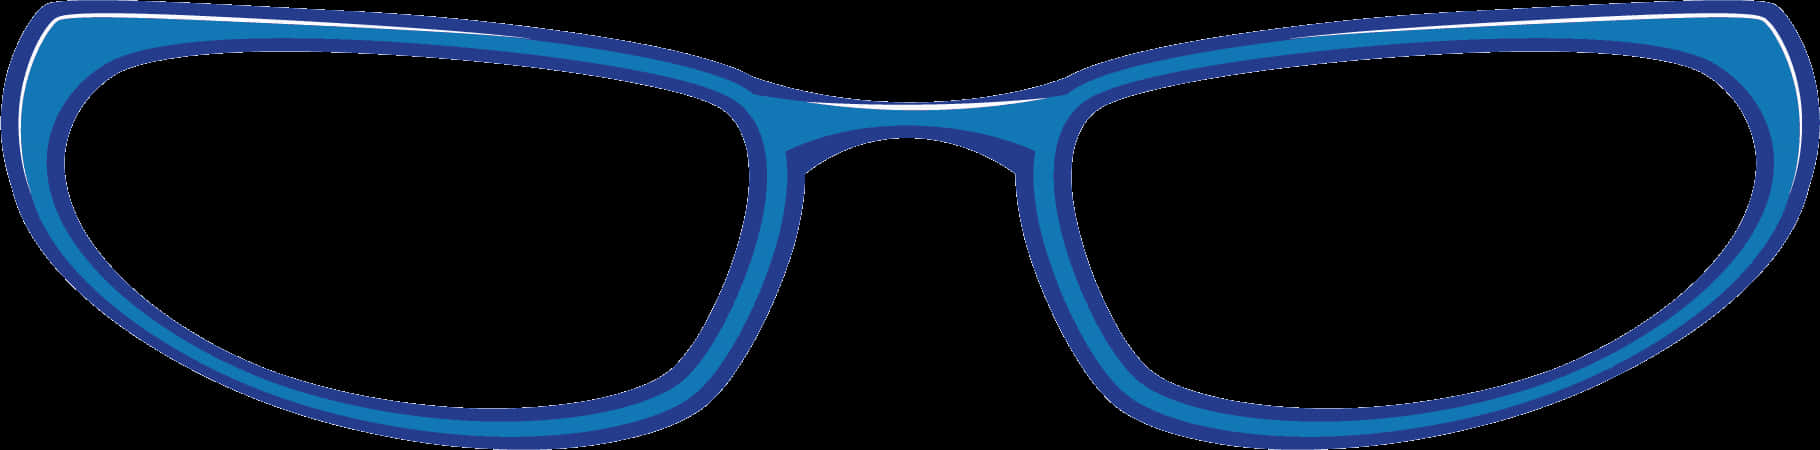 Blue Frame Eyeglasses Isolated